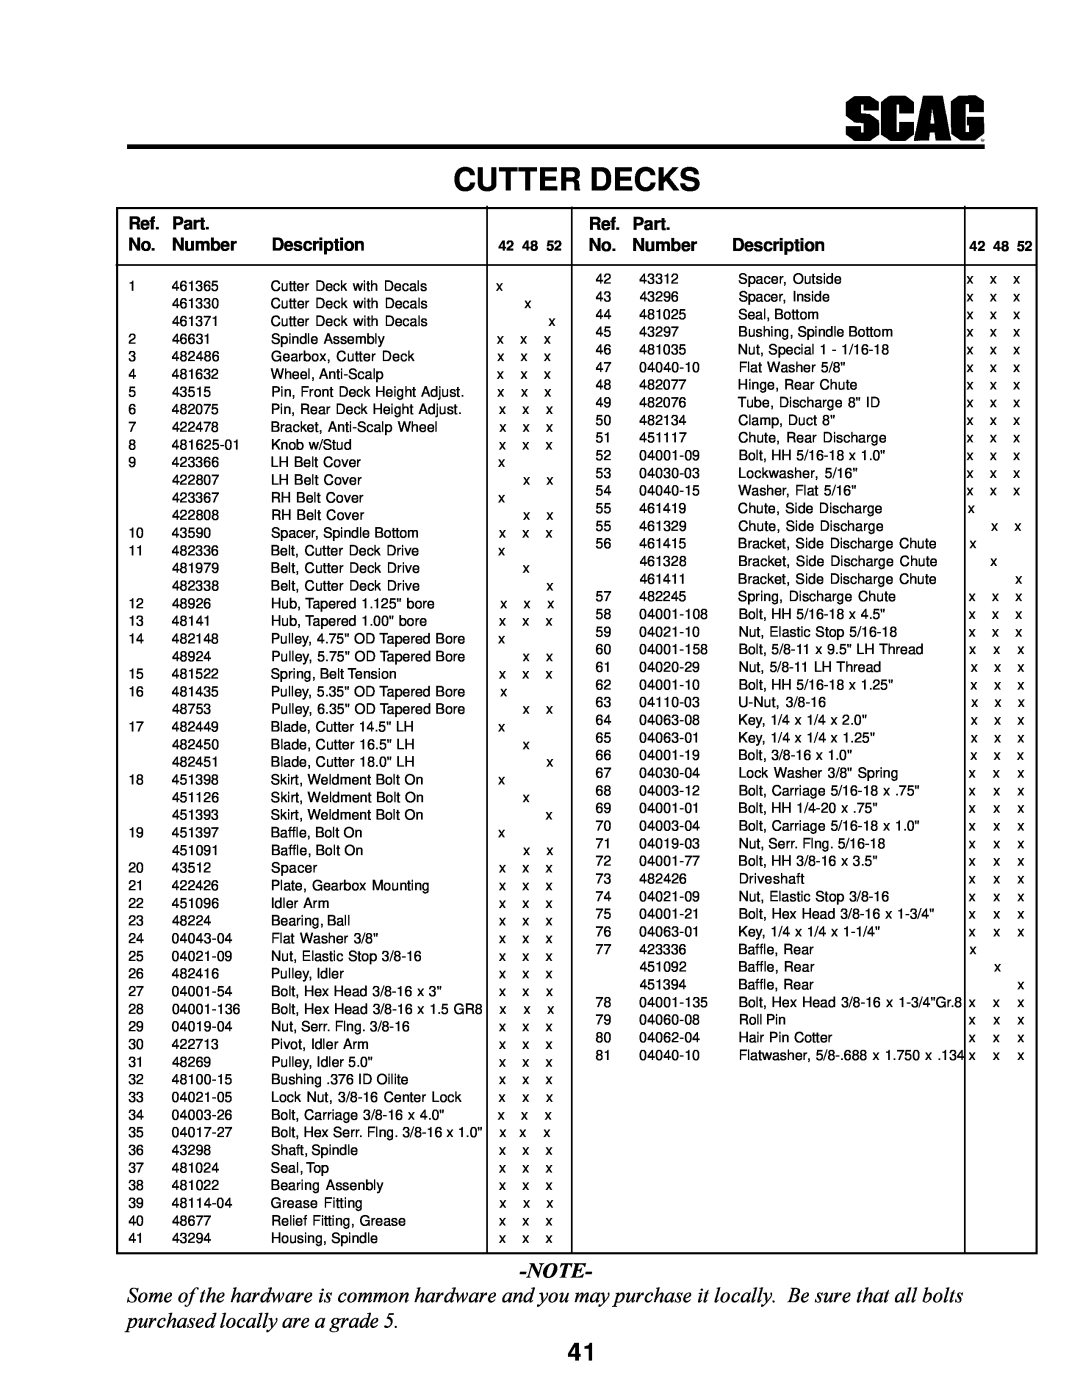 MB QUART SCR manual Cutter Decks, Part, Number, Description, 42 48 